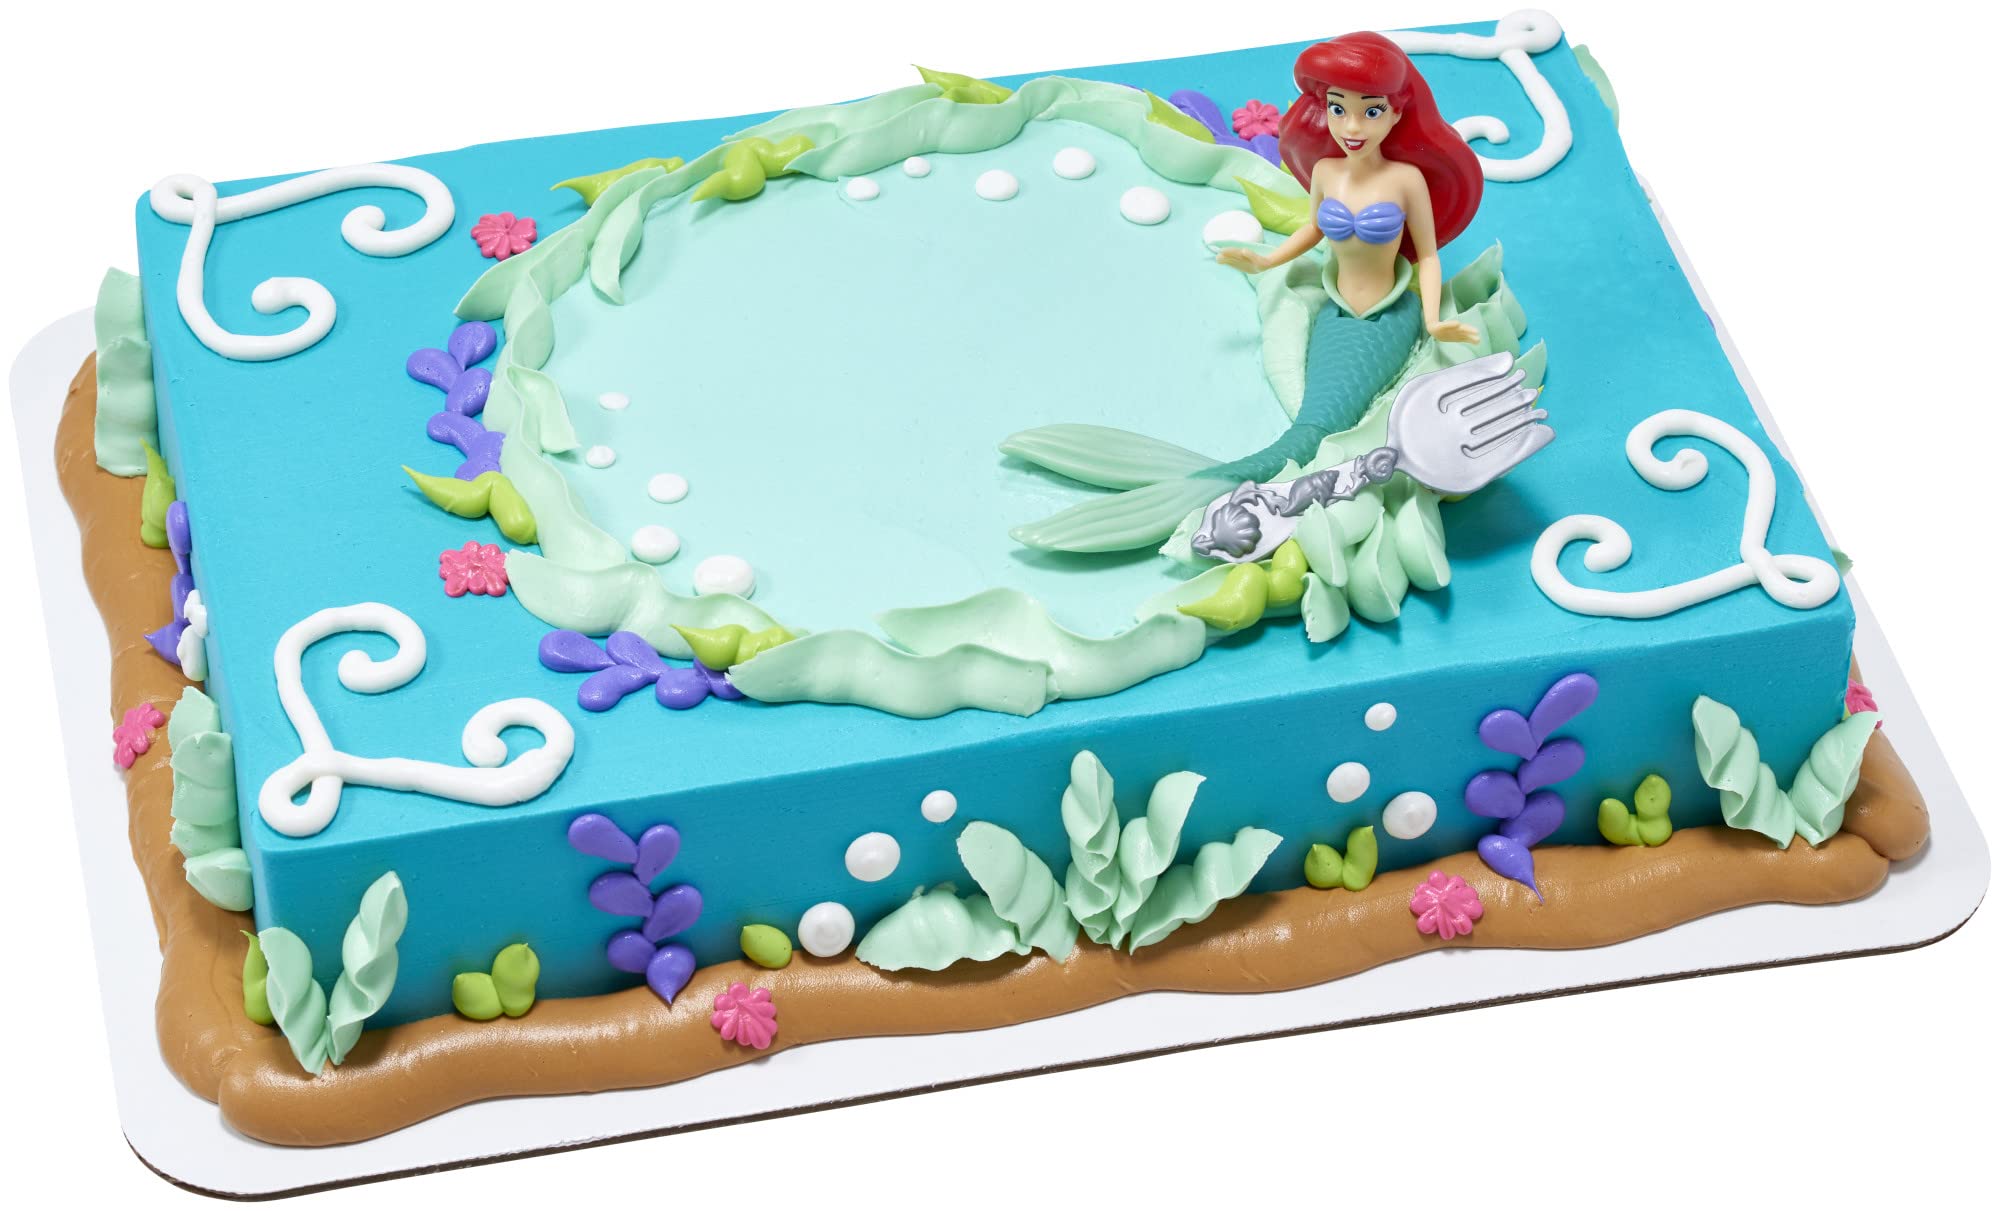 DecoSet® Disney Princess Ariel Colors of the Cake Topper - 2-Piece cake decoration